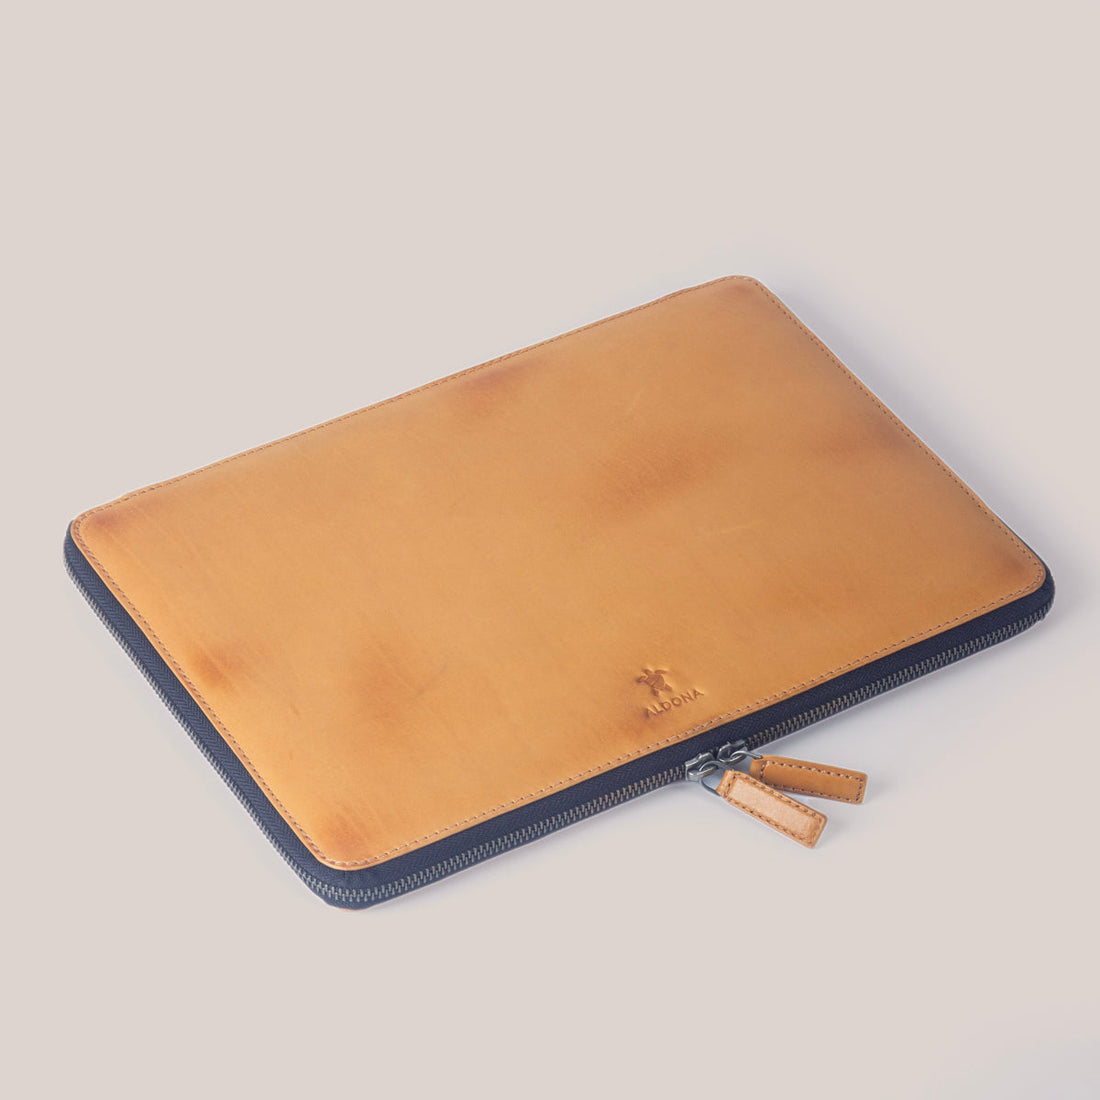 Microsoft Surface Book 15 Zippered Laptop Case - Felt and Tan Crunch